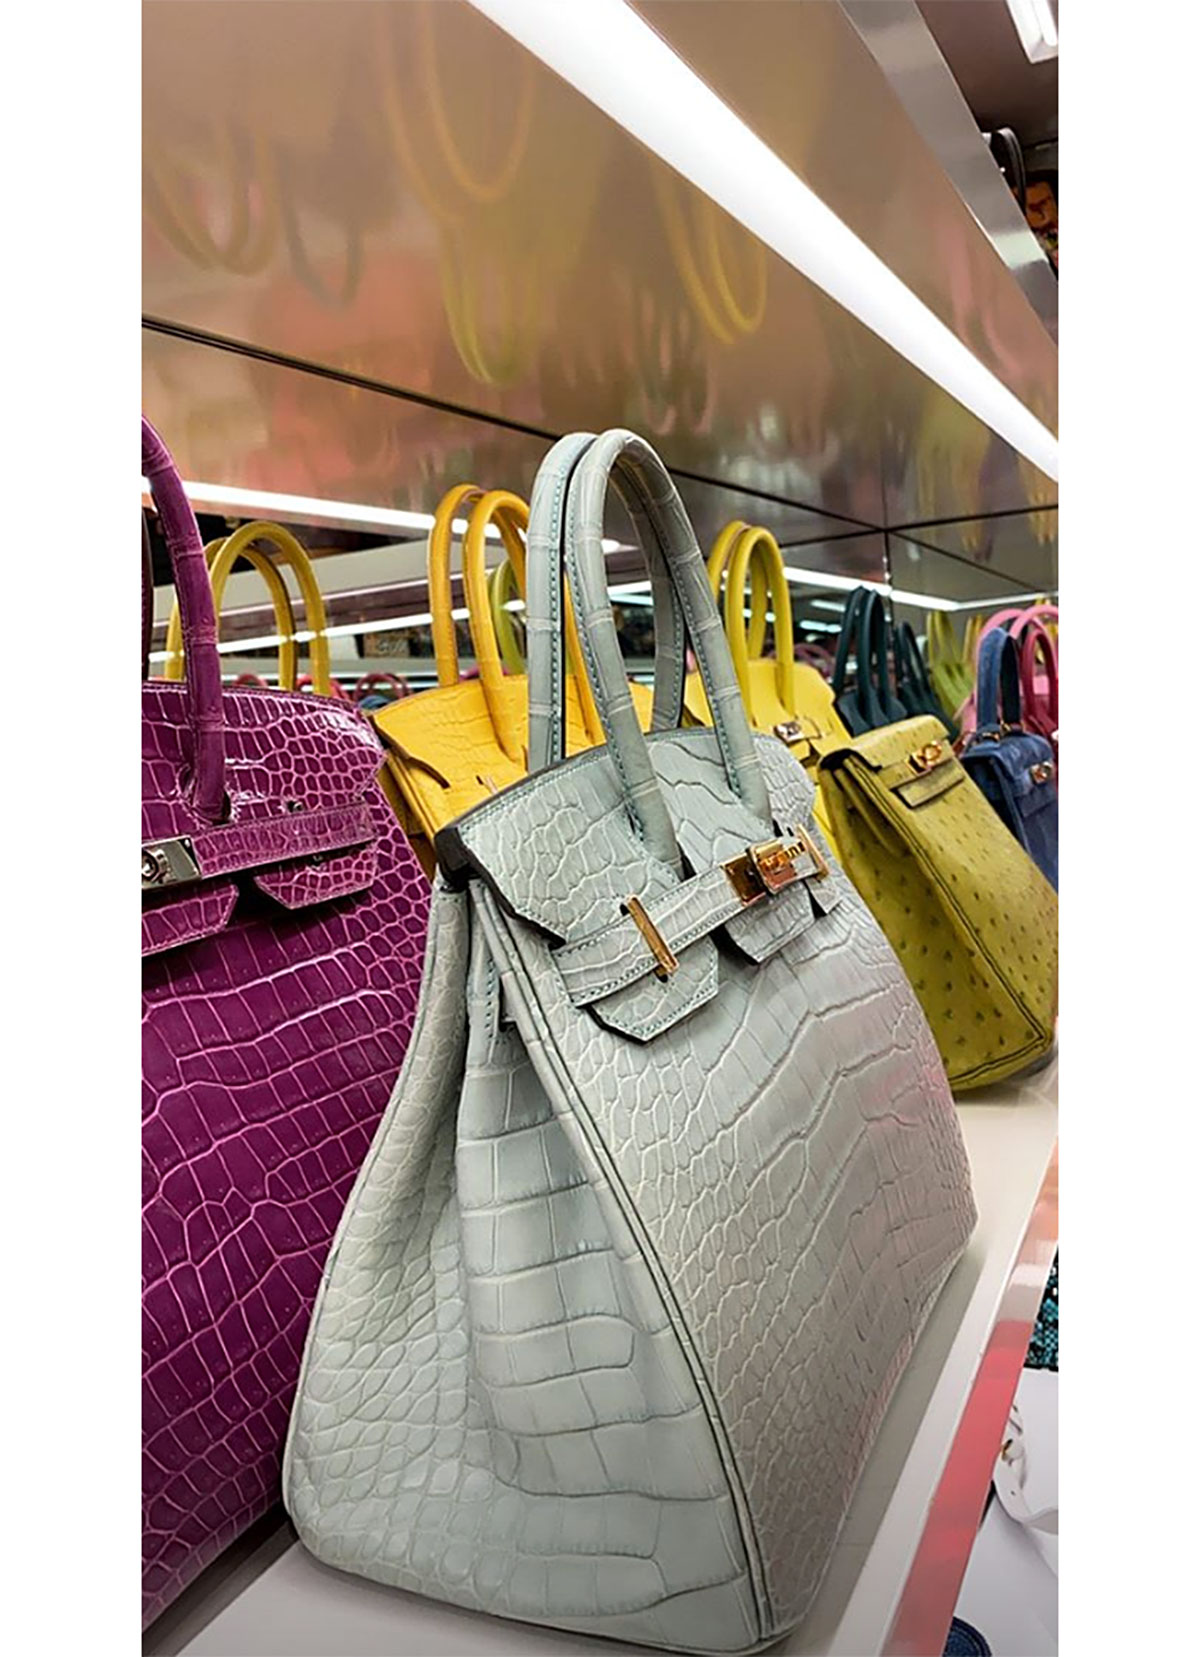 Handmade bags (@arnelsmommy) • Instagram photos and videos